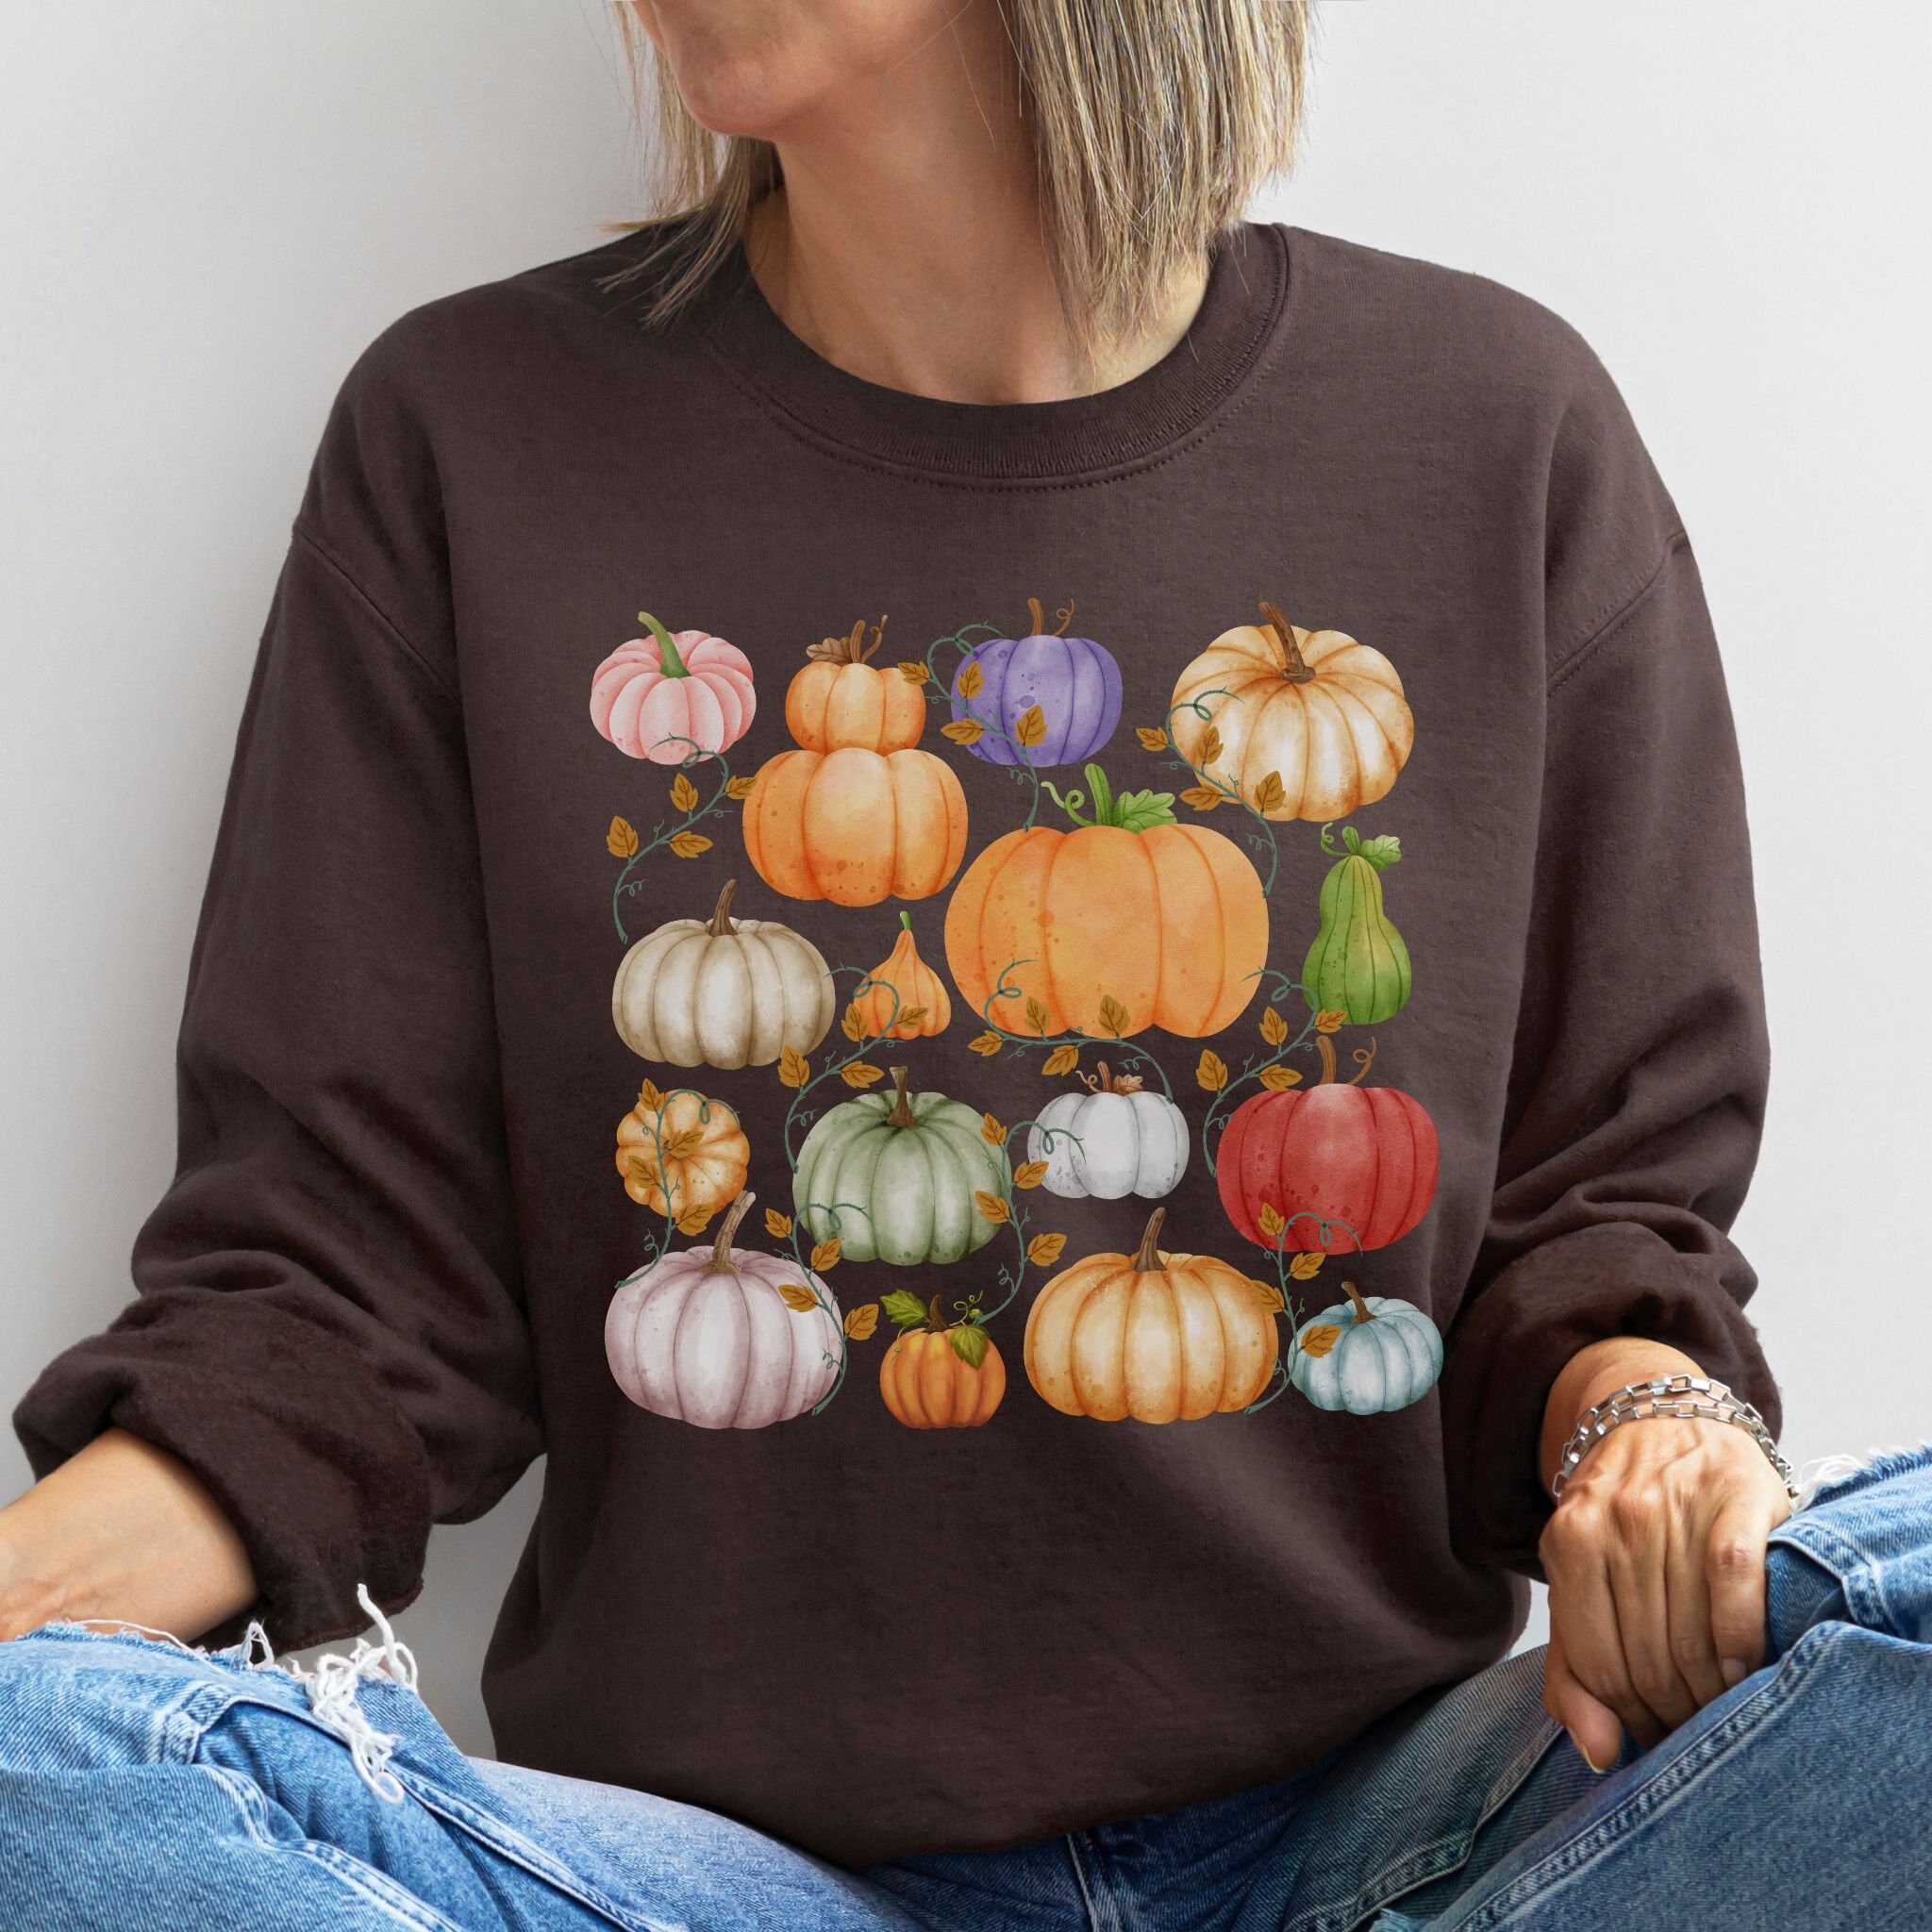 Discover Farm Fresh Pumpkin Sweatshirt For Women Hello Pumpkin Spice Sweatshirt Hey Pumpkin Sweatshirt Fall Pumpkin Sweater Plus Size Fall Sweatshirt